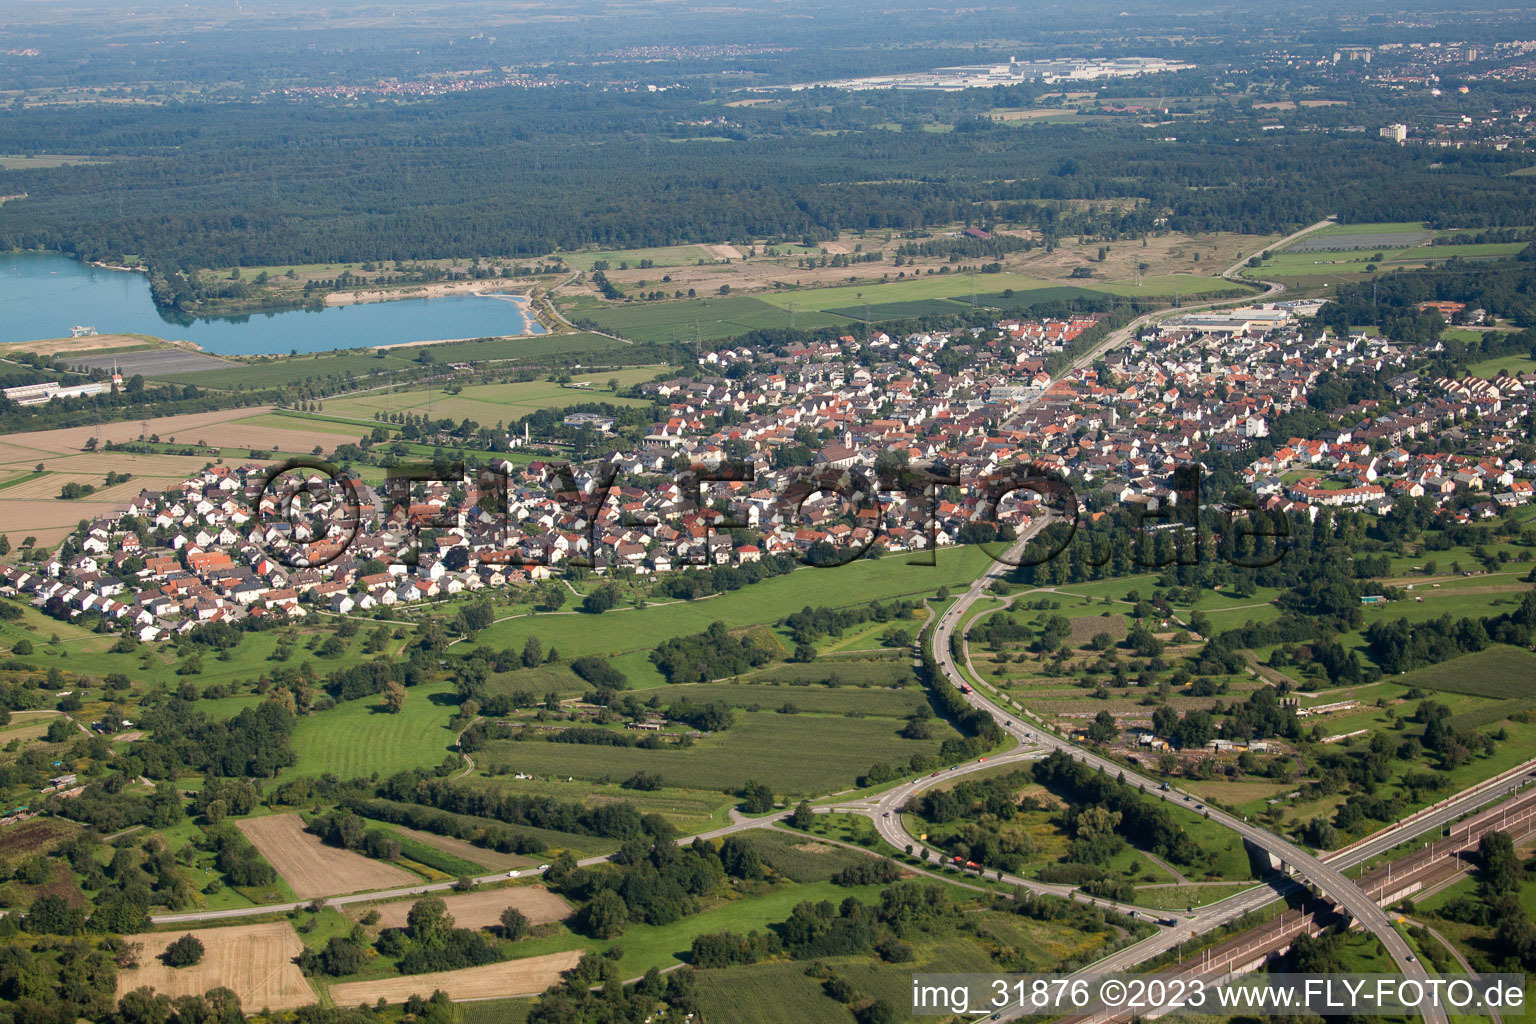 Aerial view of District Sandweier in Baden-Baden in the state Baden-Wuerttemberg, Germany